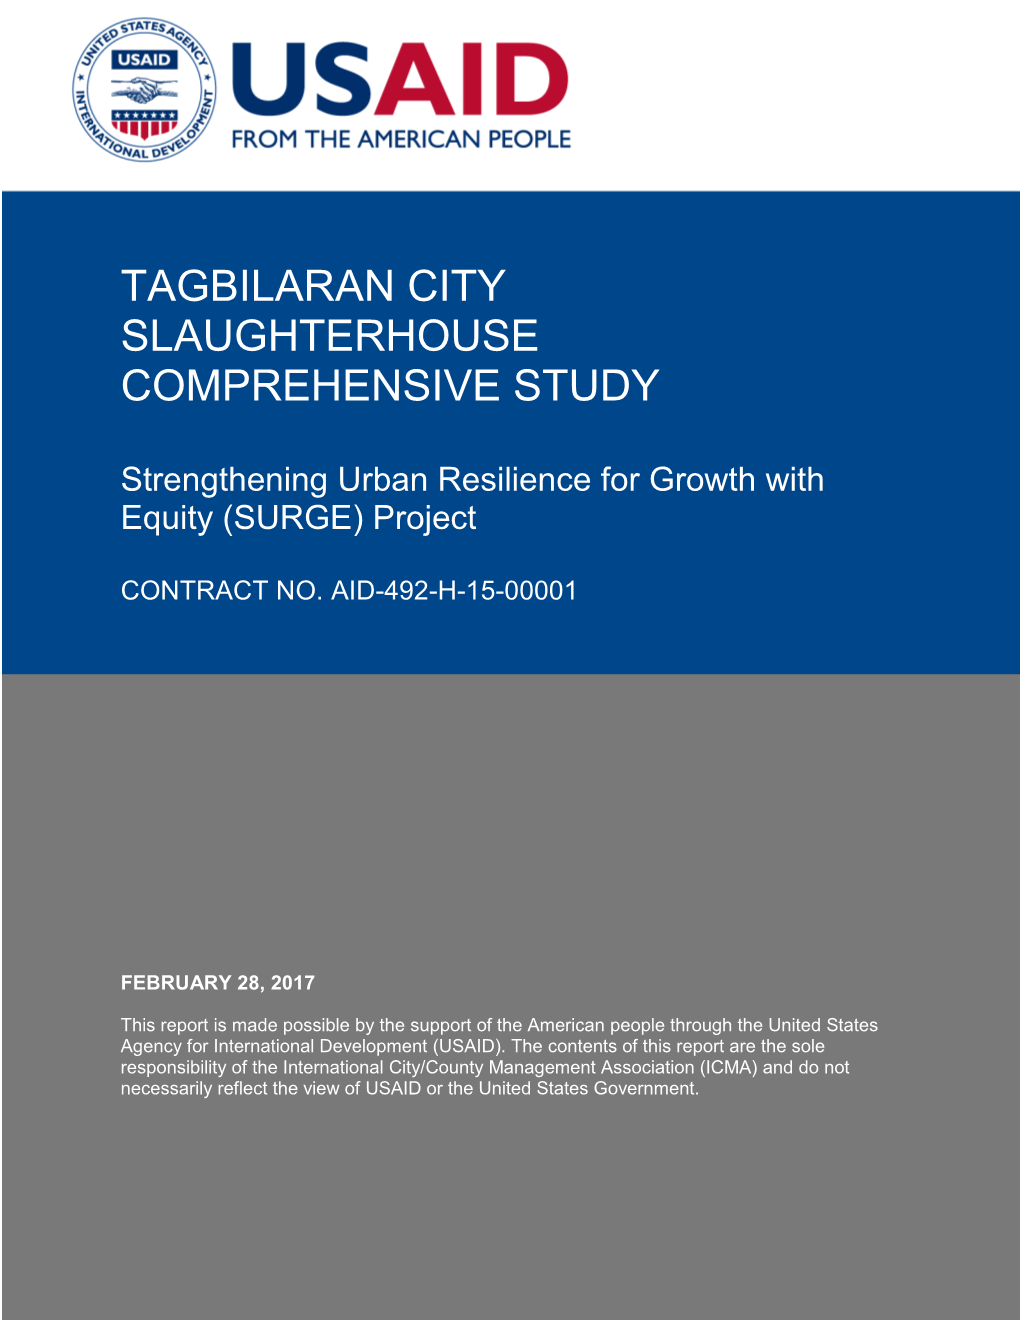 Tagbilaran City Slaughterhouse Comprehensive Study